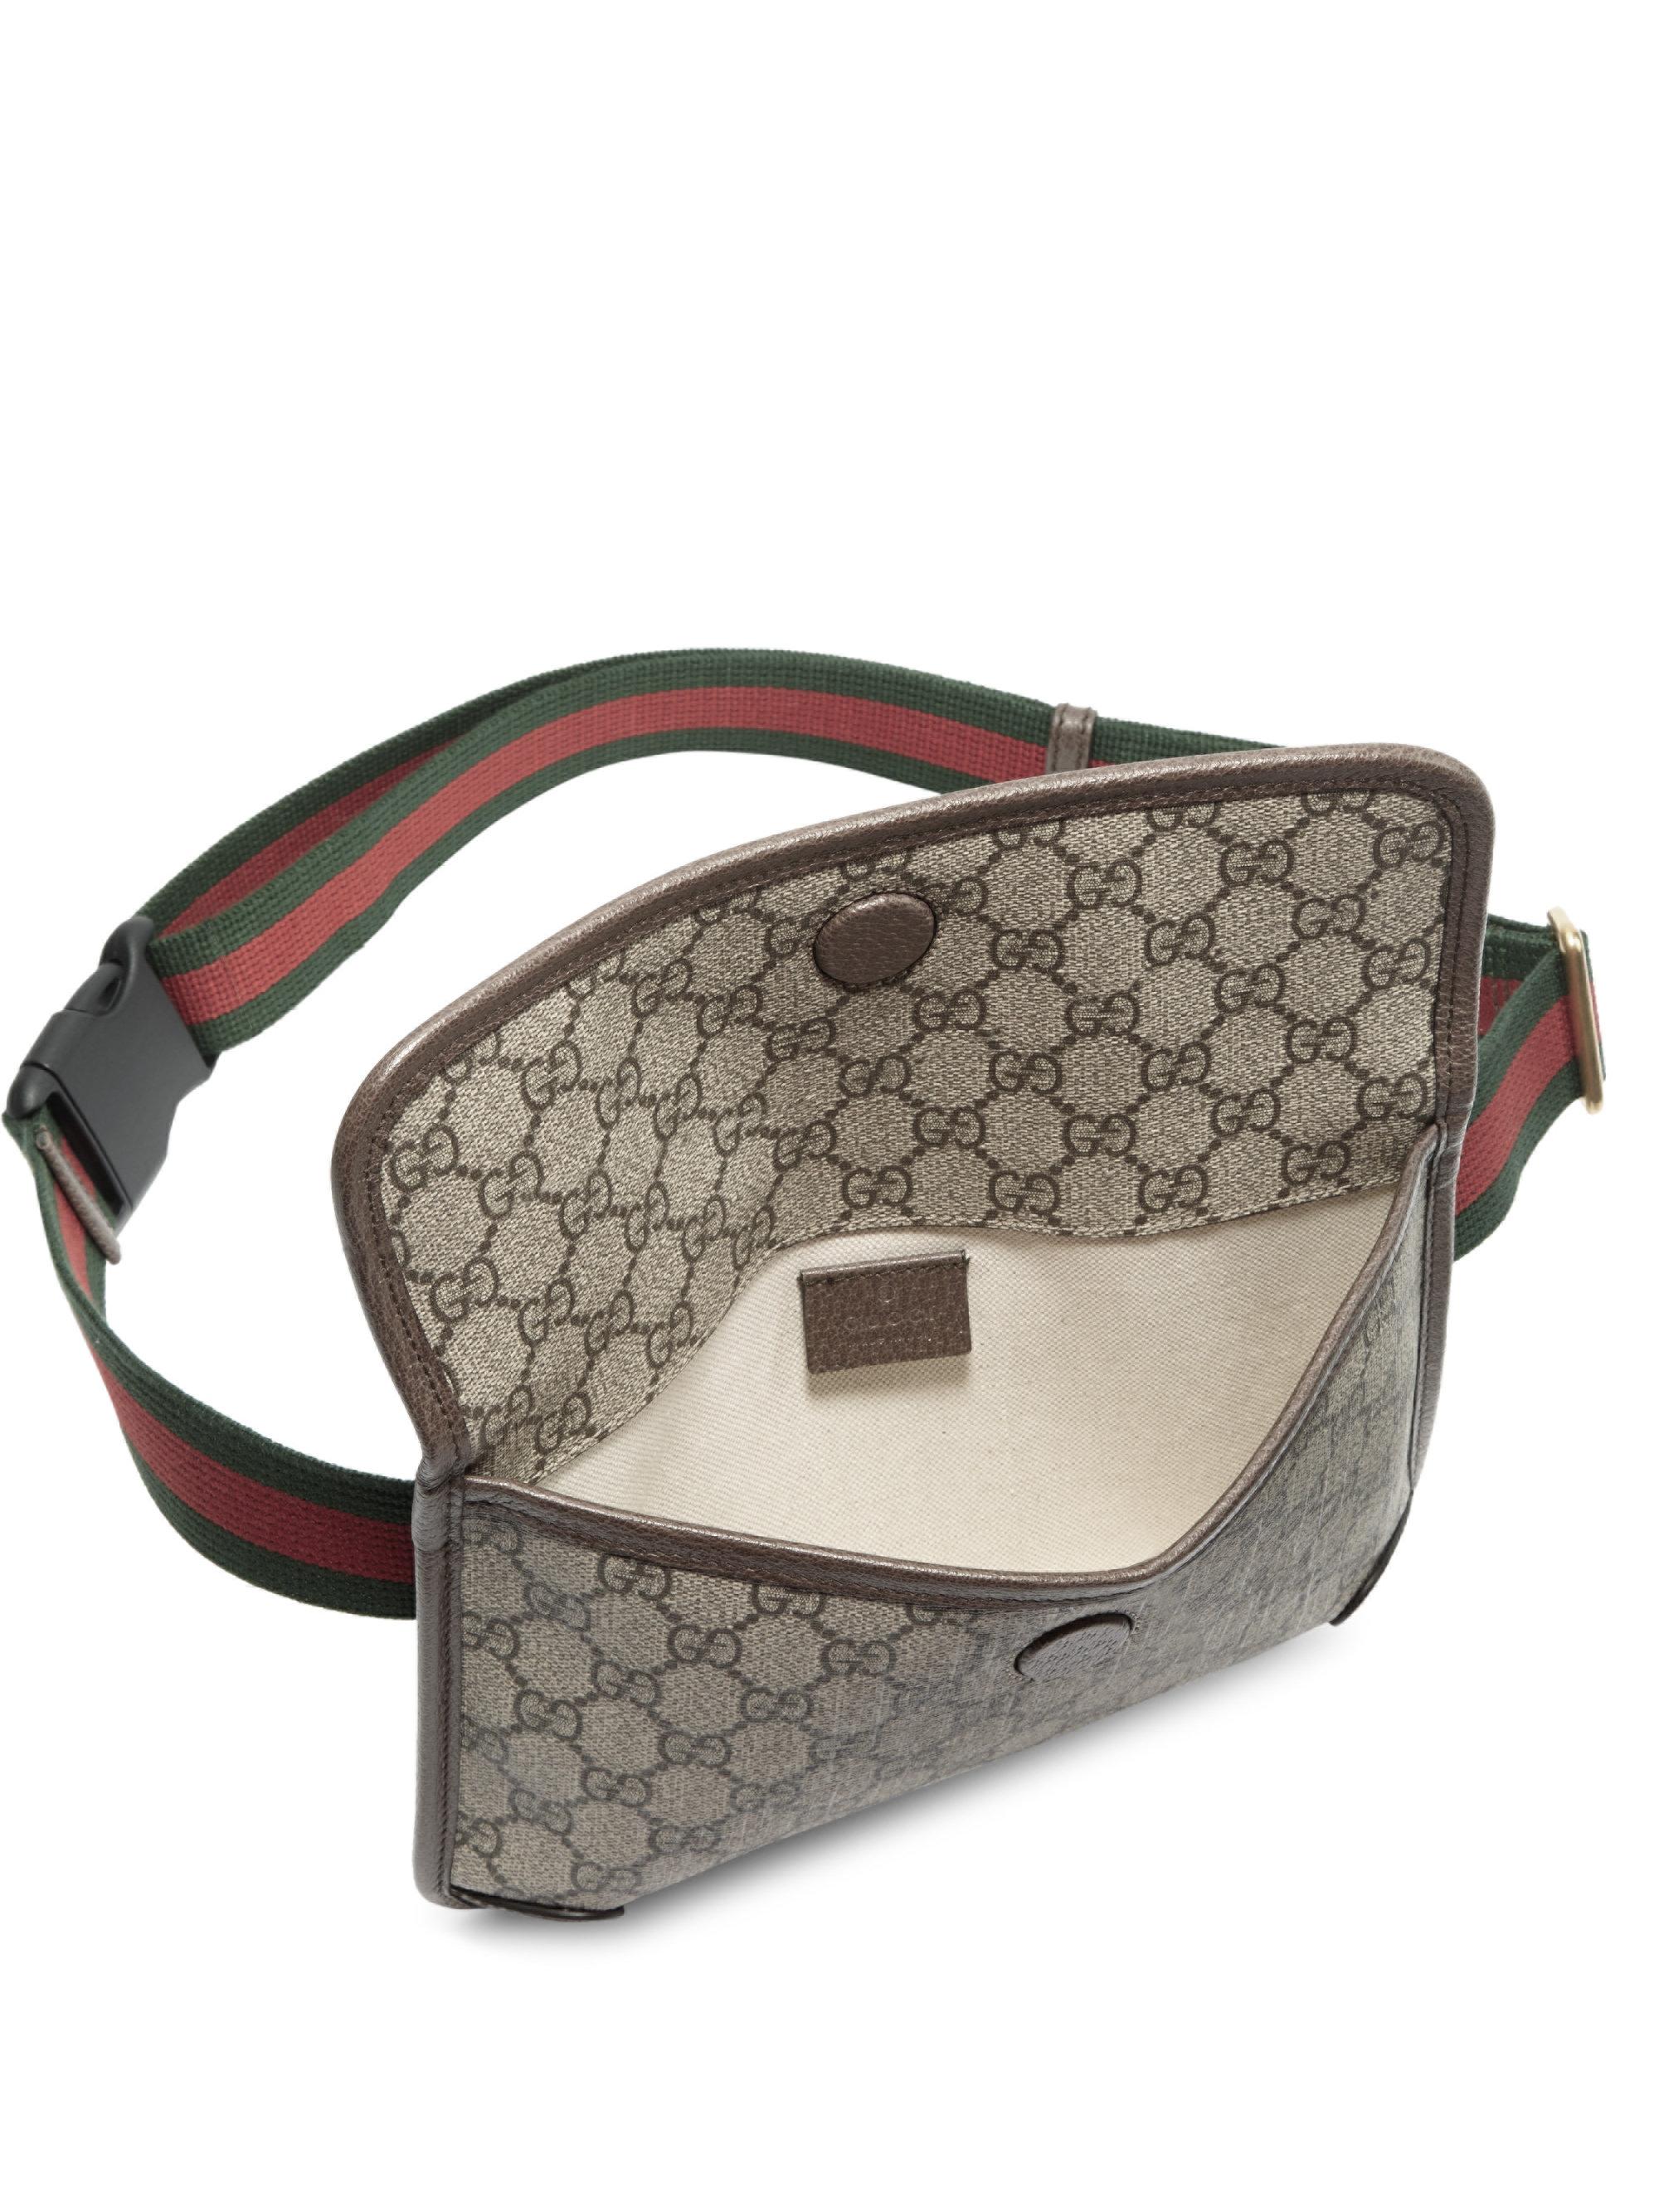  Gucci  Cloth Belt  Bag Images NAR Media Kit